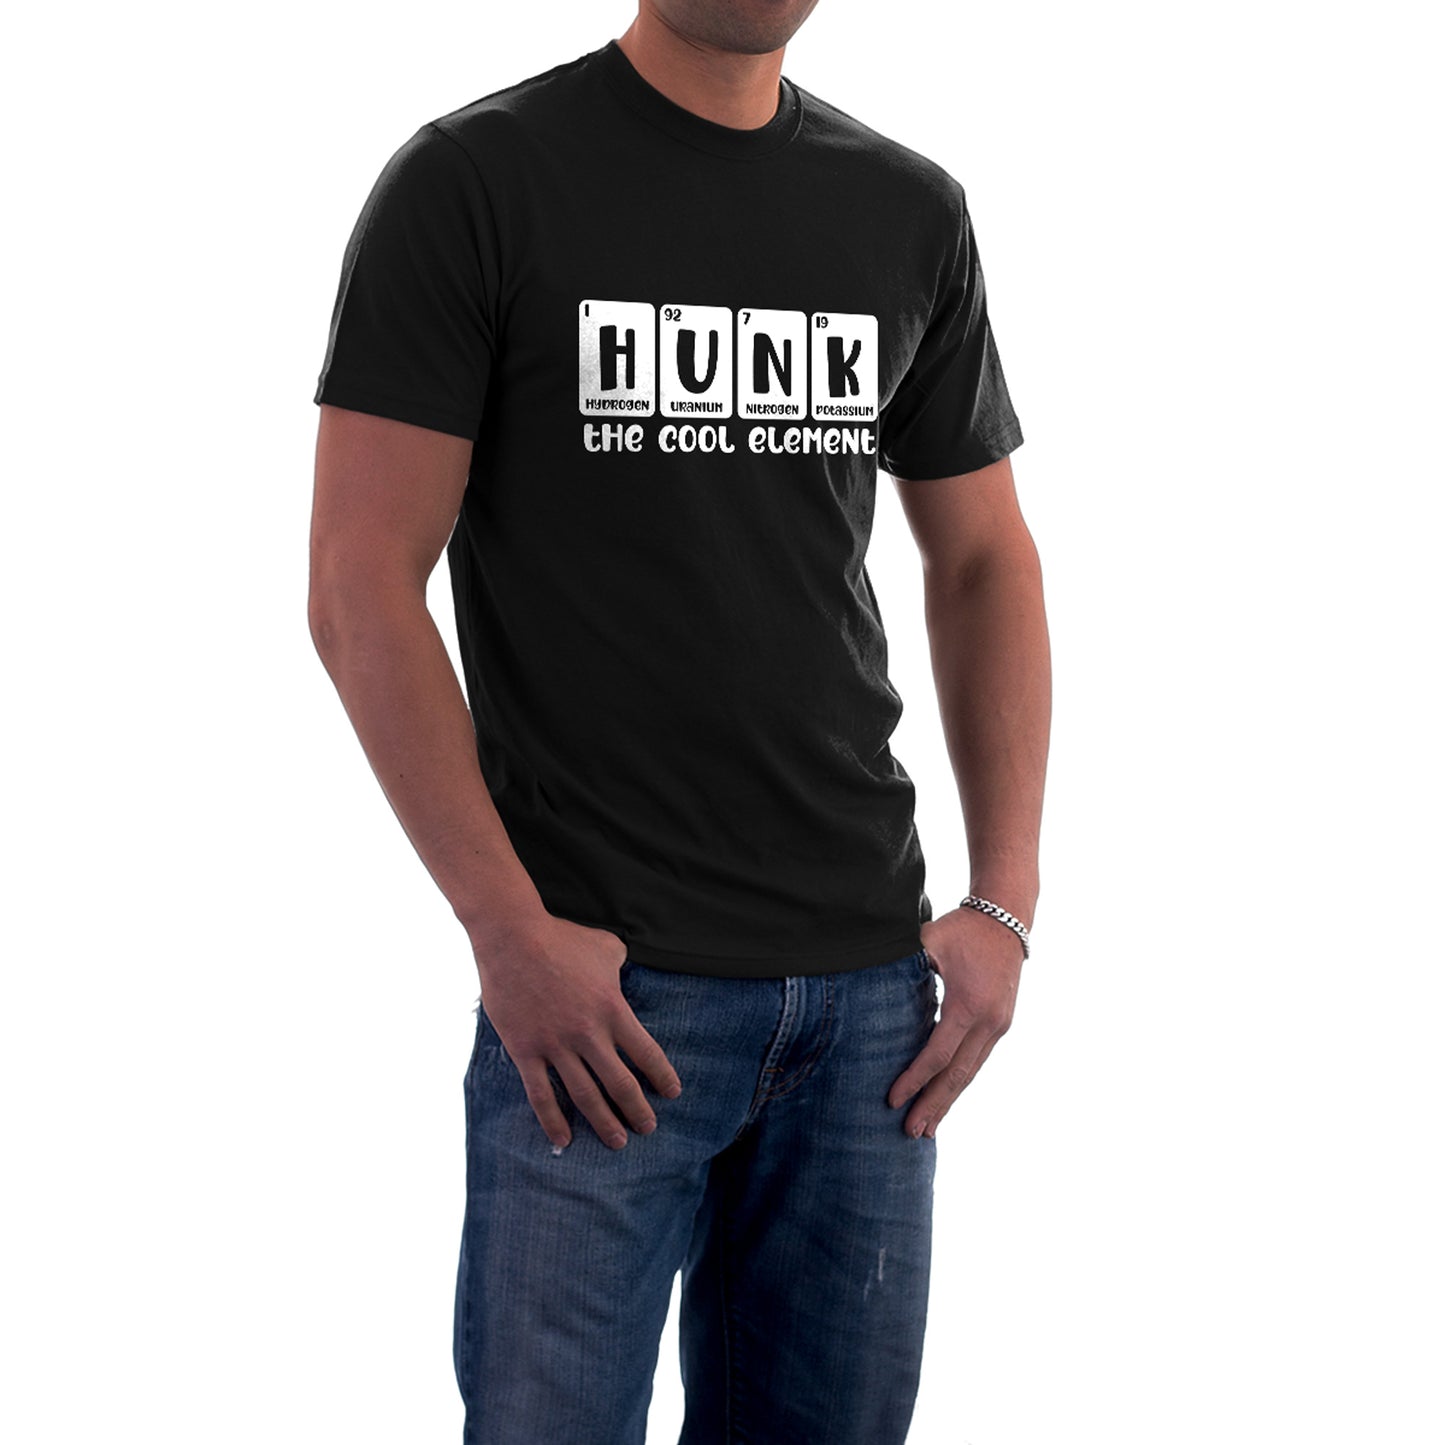 Hunk and Babe matching Couple T shirts- Black